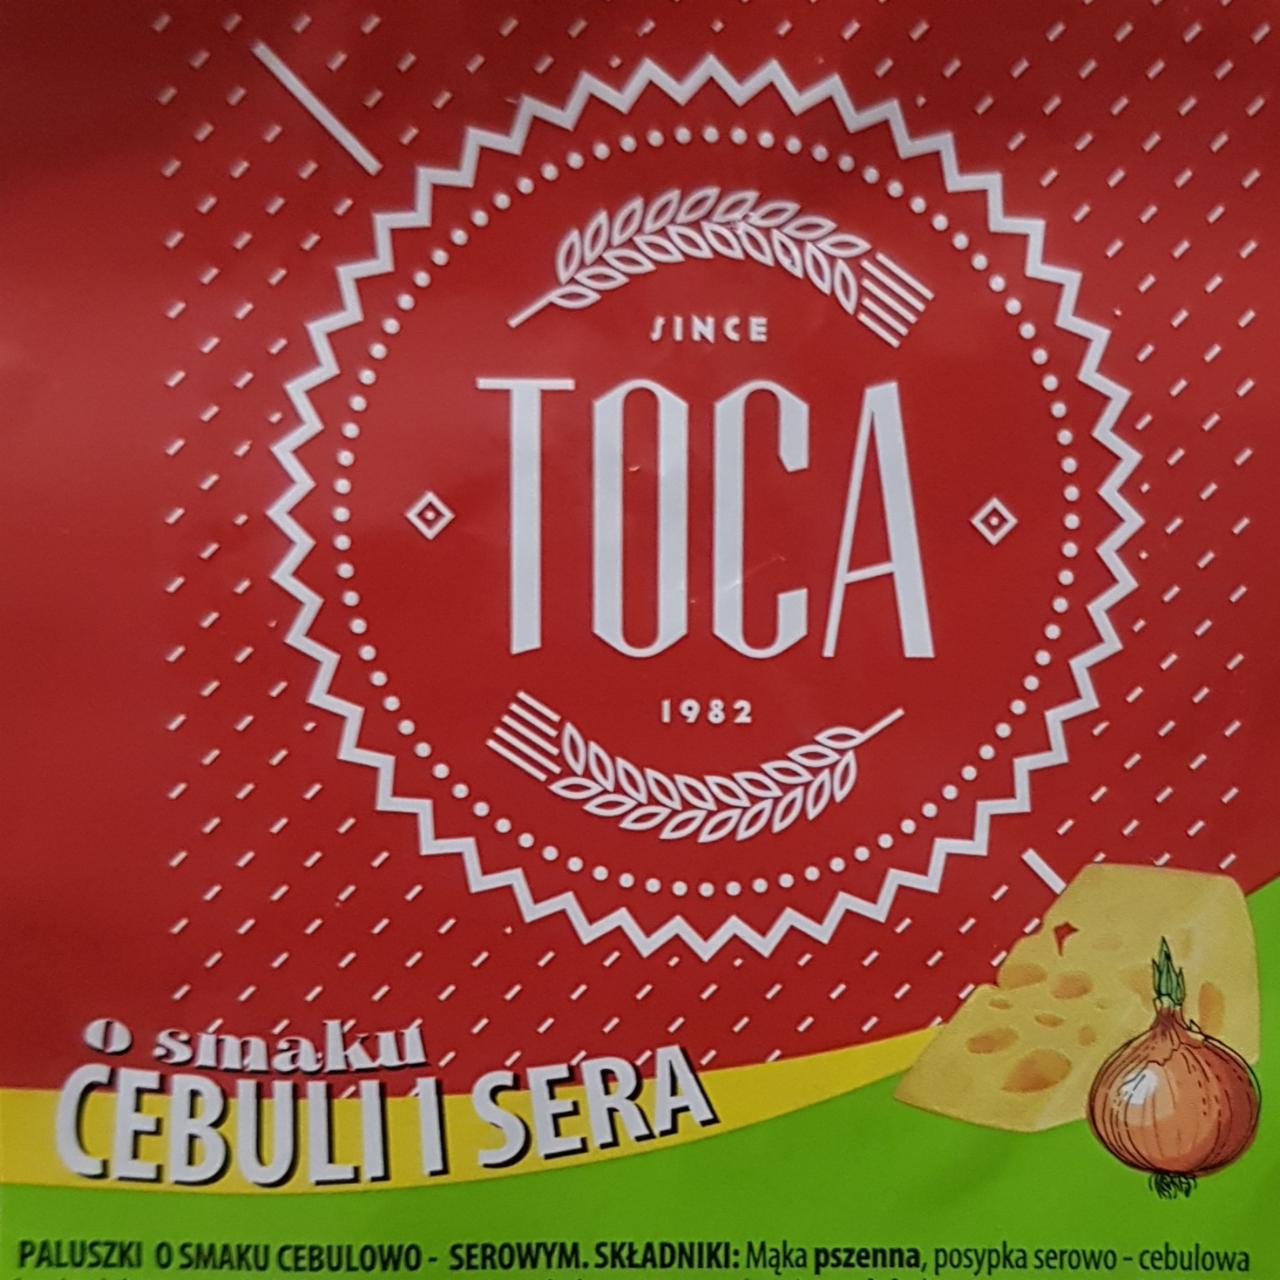 Zdjęcia - Paluszki o smaku cebuli i sera Toca